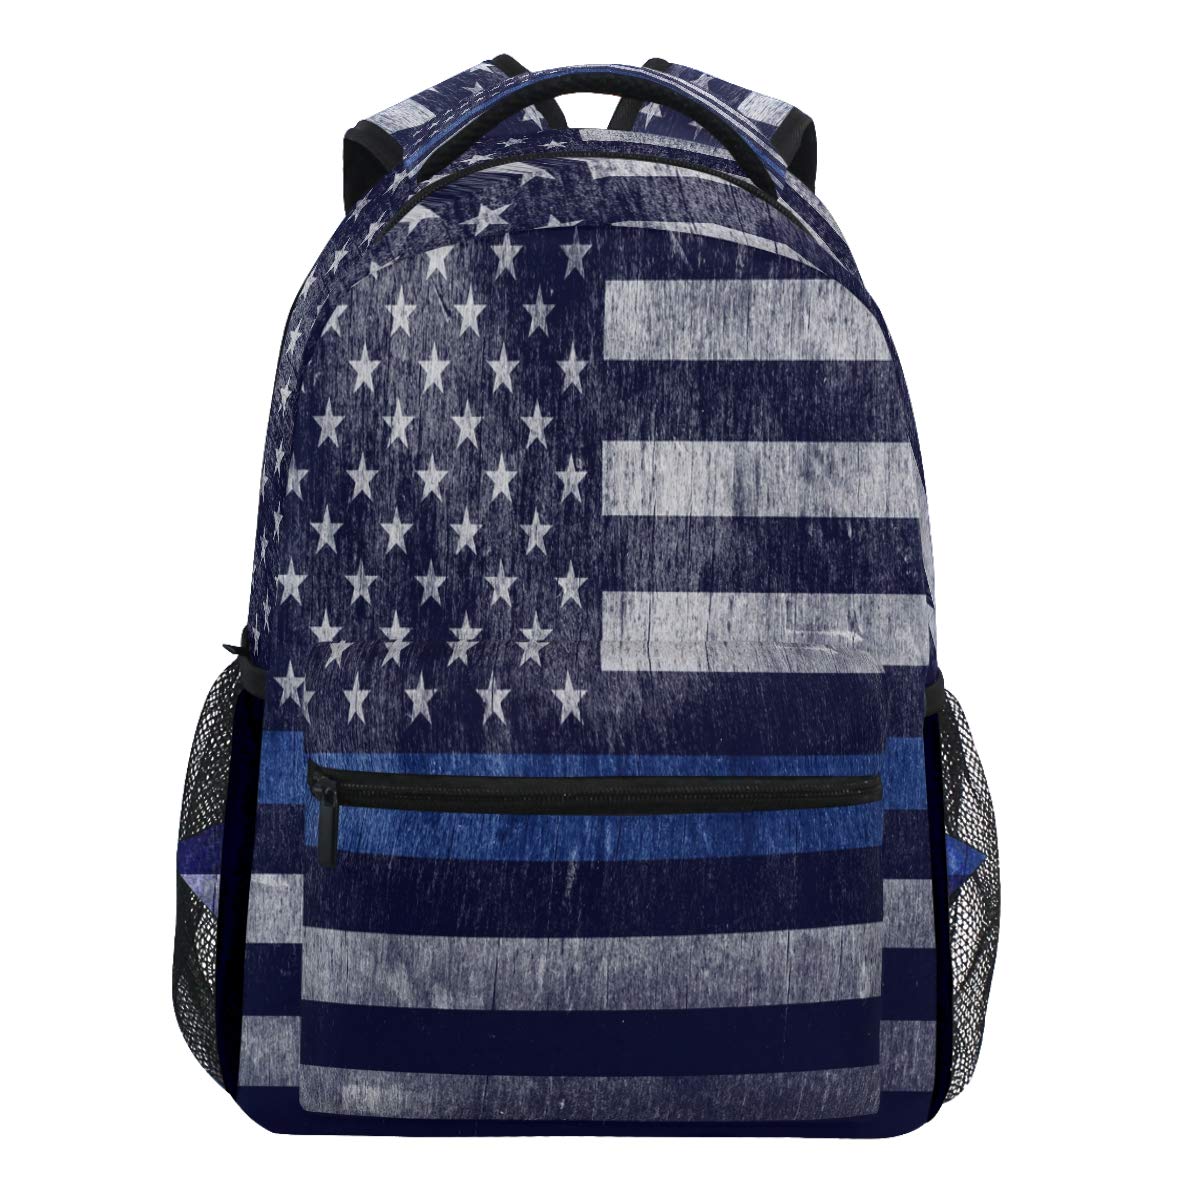 Oarencol Amerika-Rucksack mit Flagge, gestreift, Blau